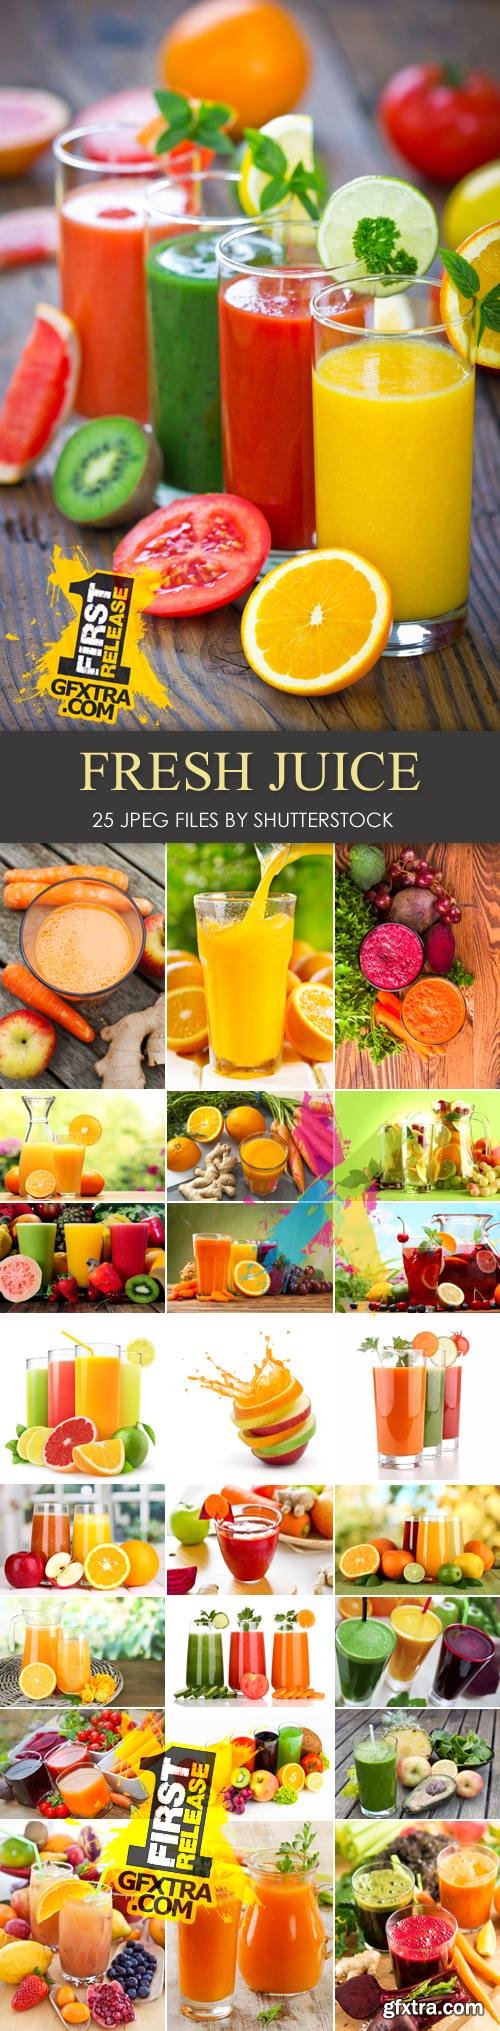 Stock Photo - Fresh Juice